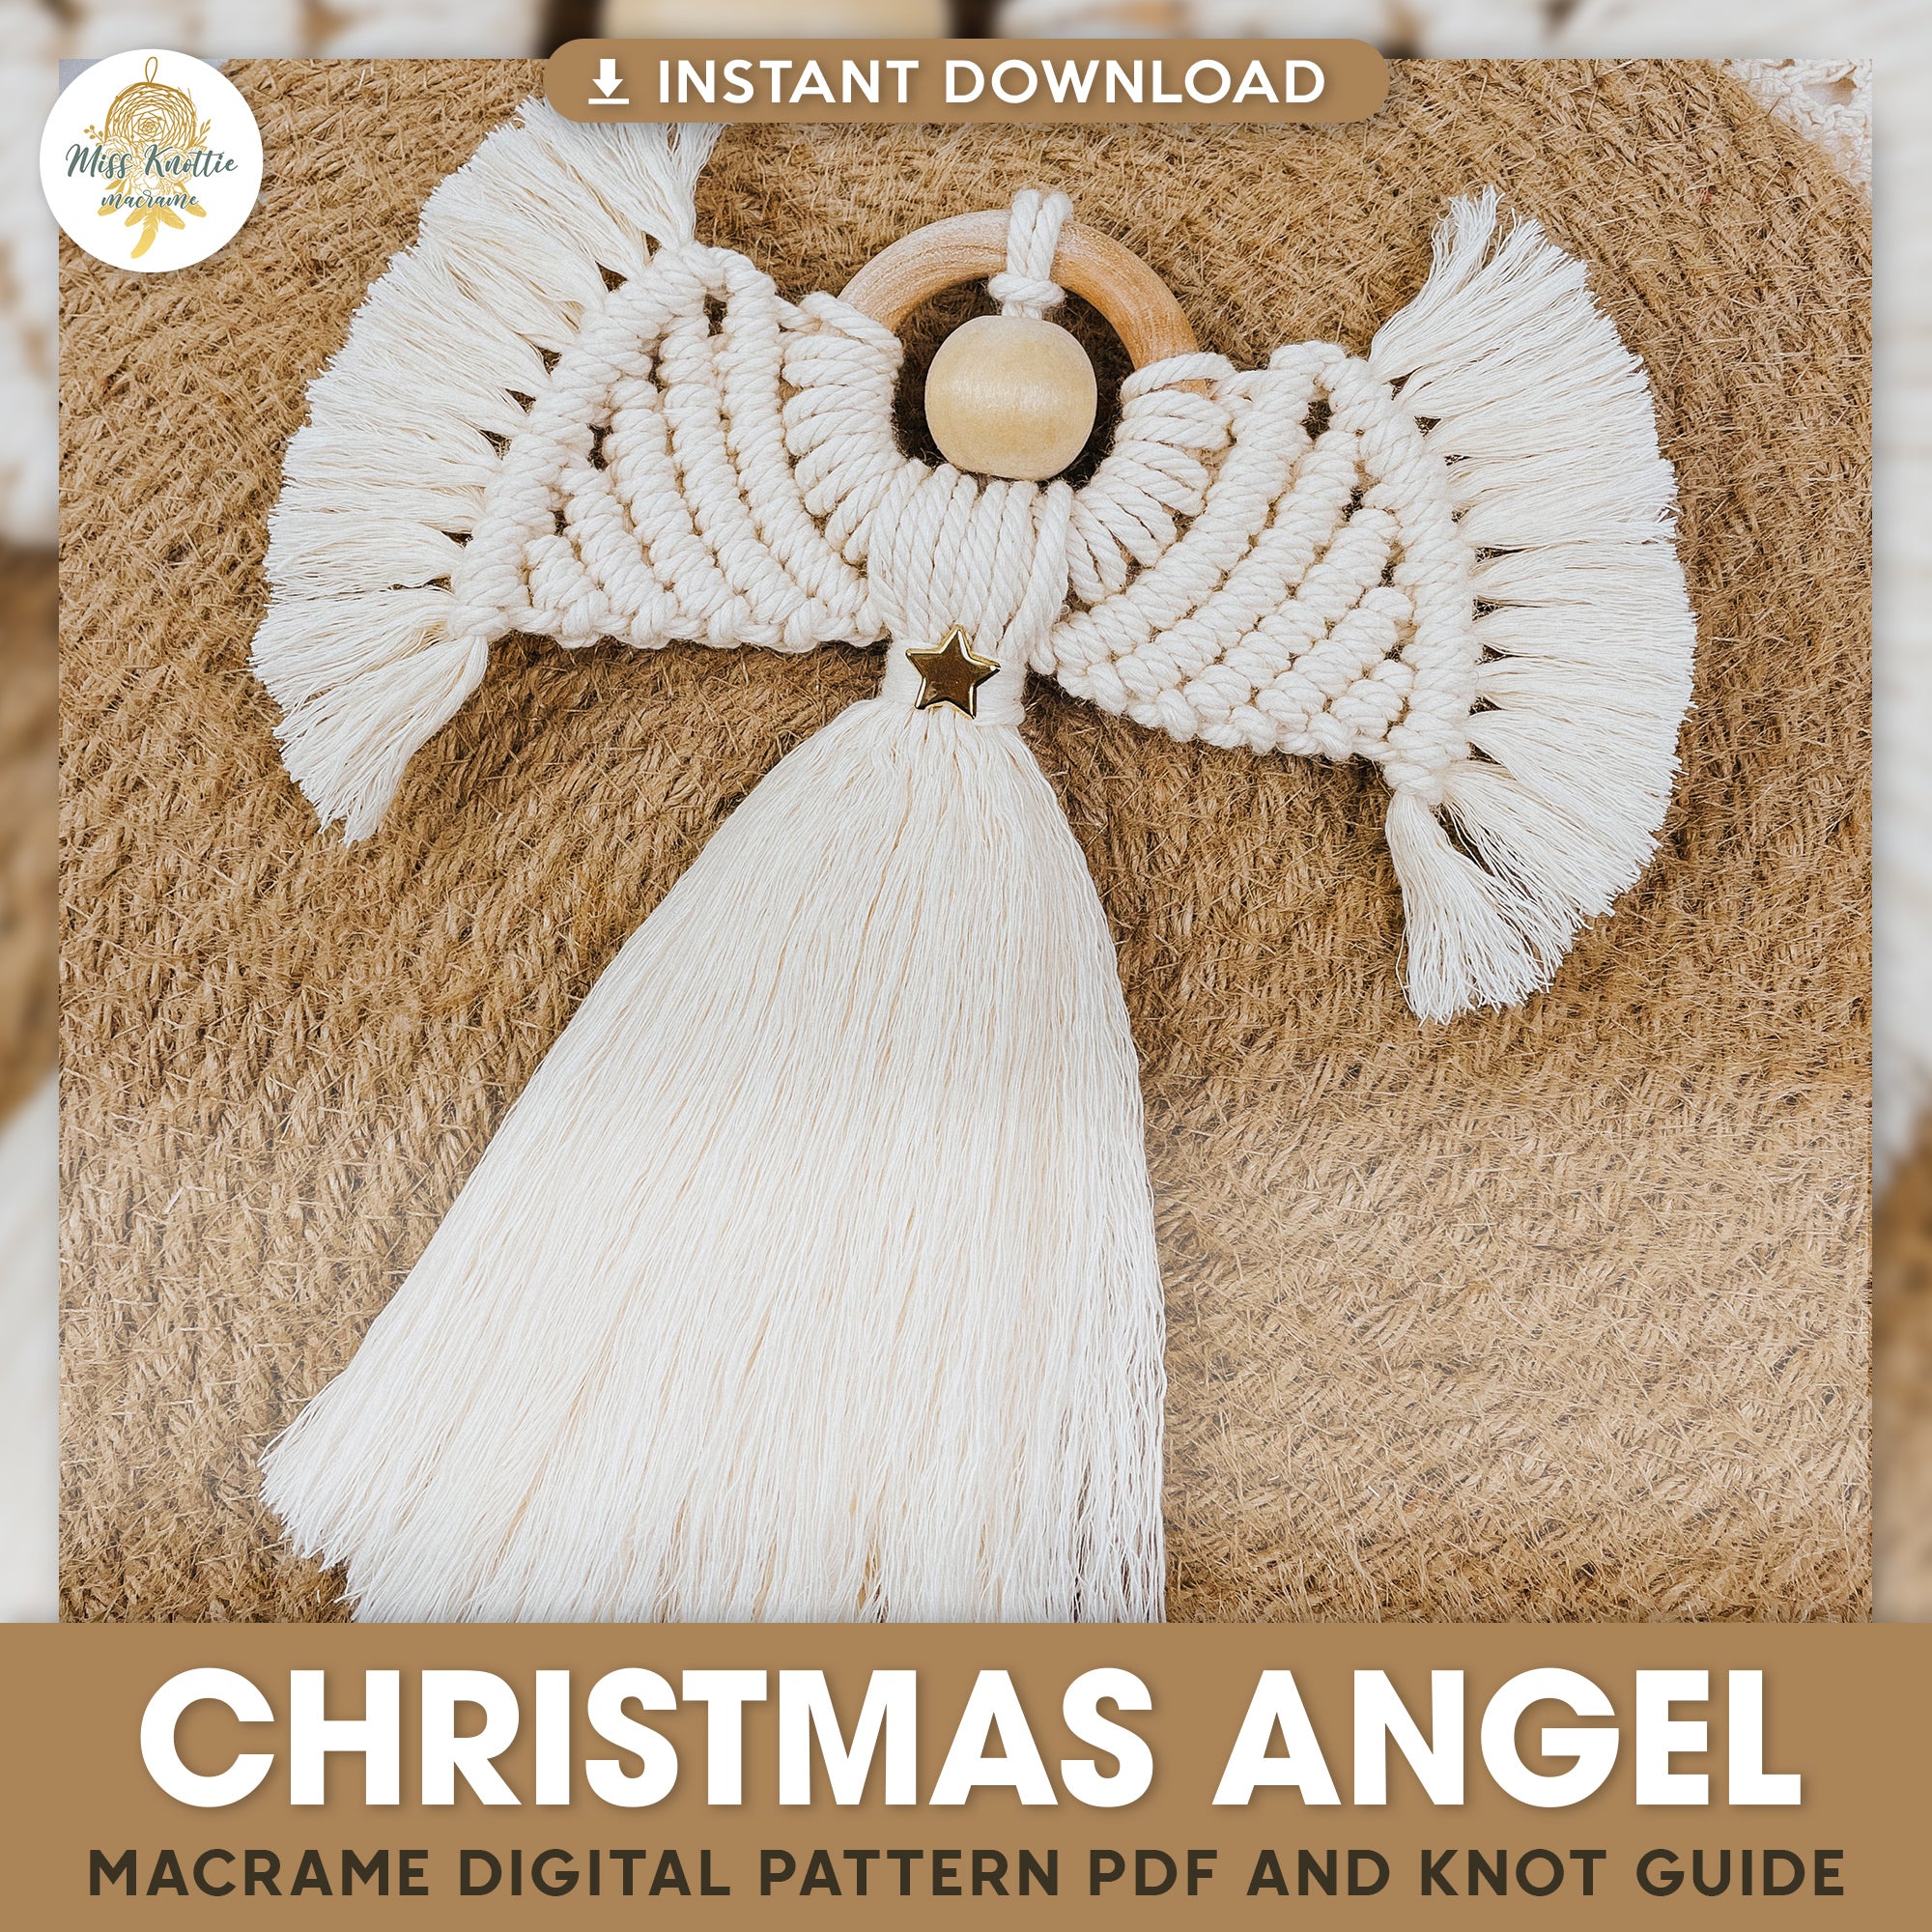 Macrame Christmas Angel Pattern - Written Pdf And Knot Guide